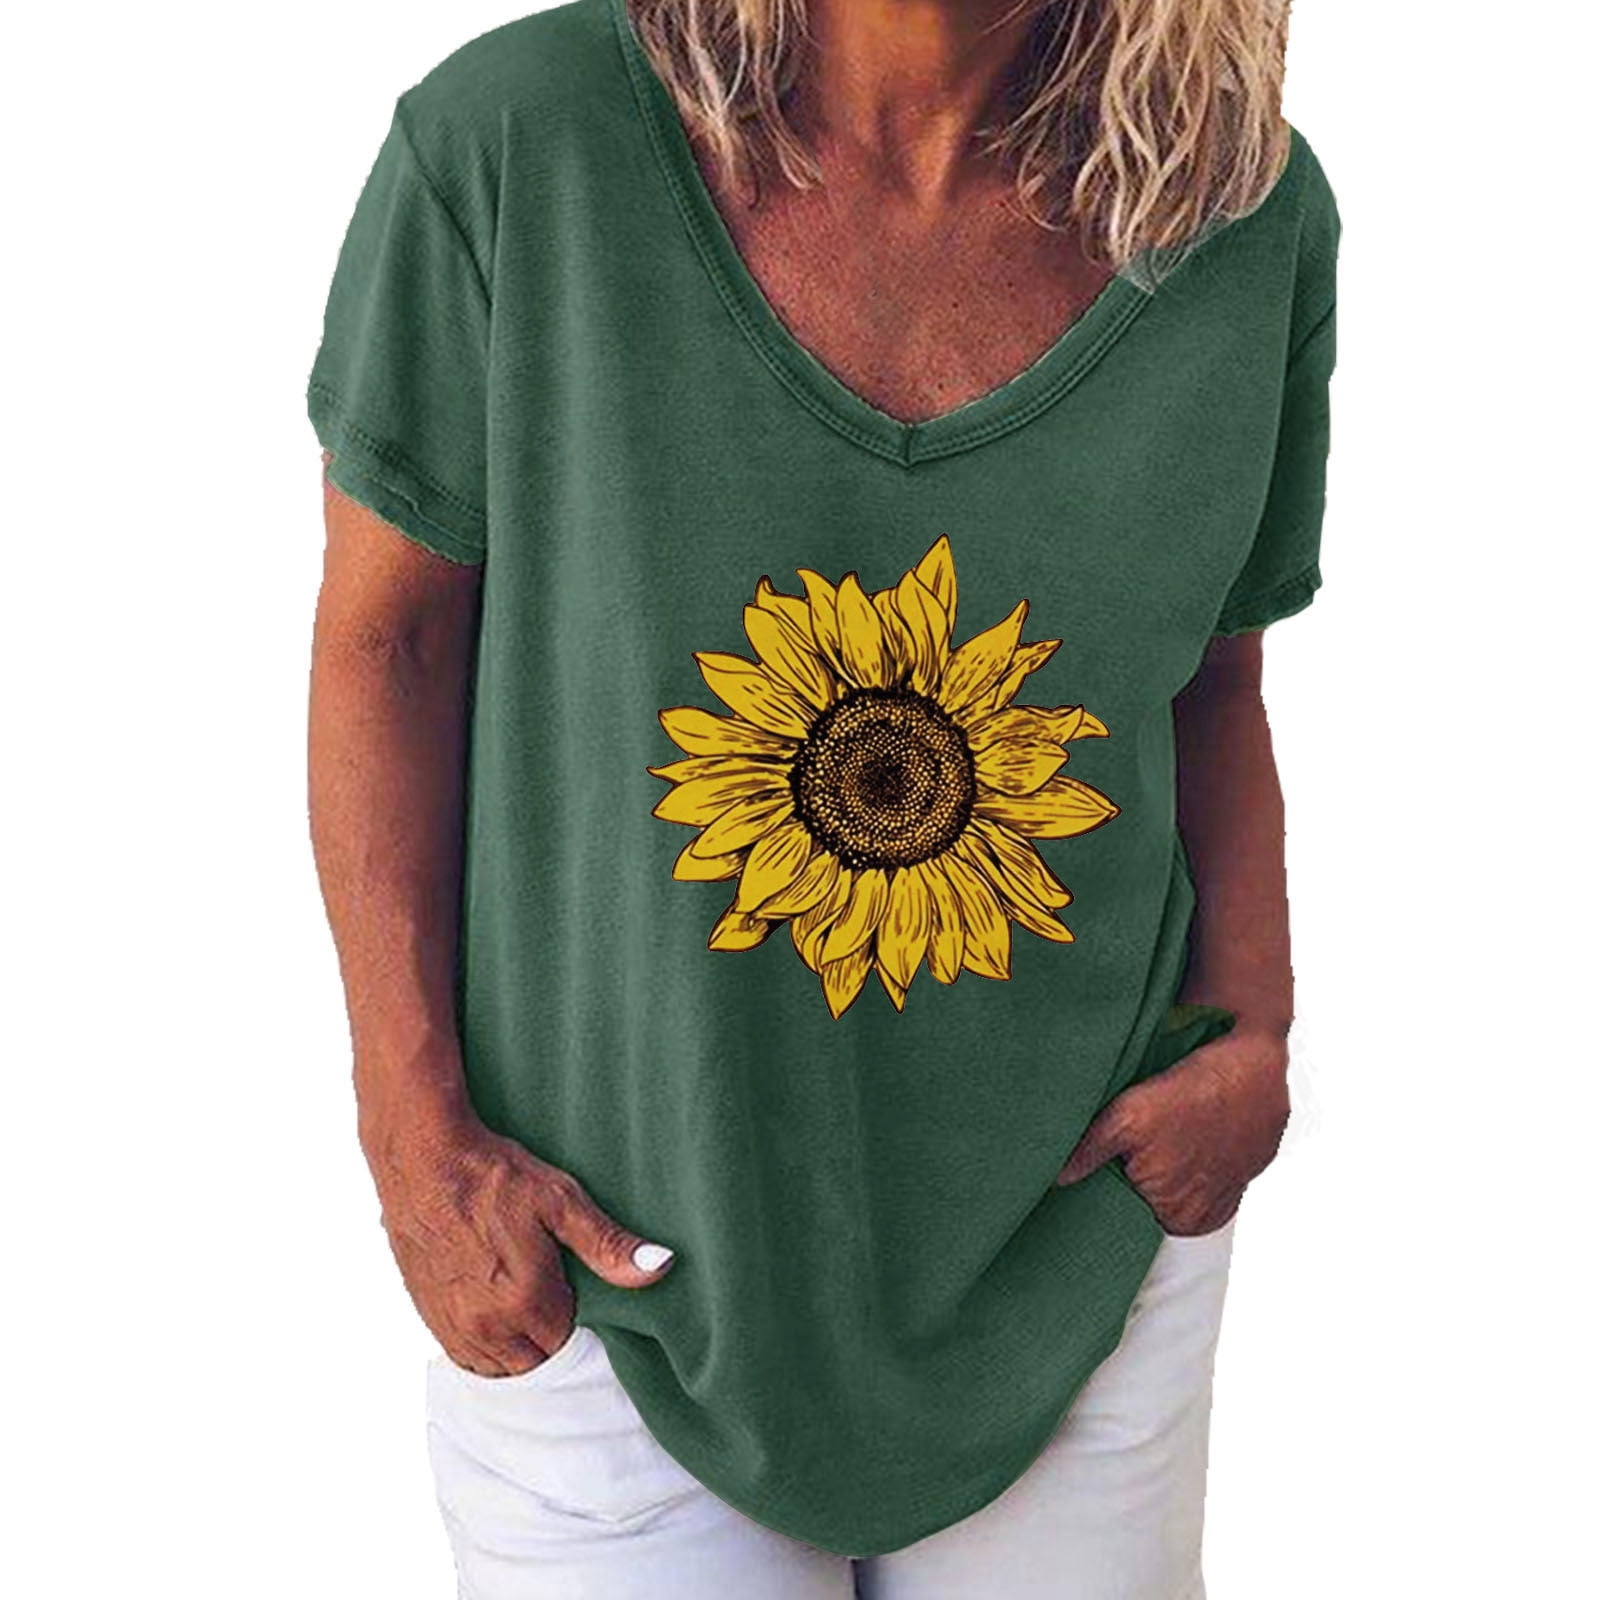 Women Ladies Loose Short Sleeve T Shirt Tops Blouse sunflower Printed Casual Tee